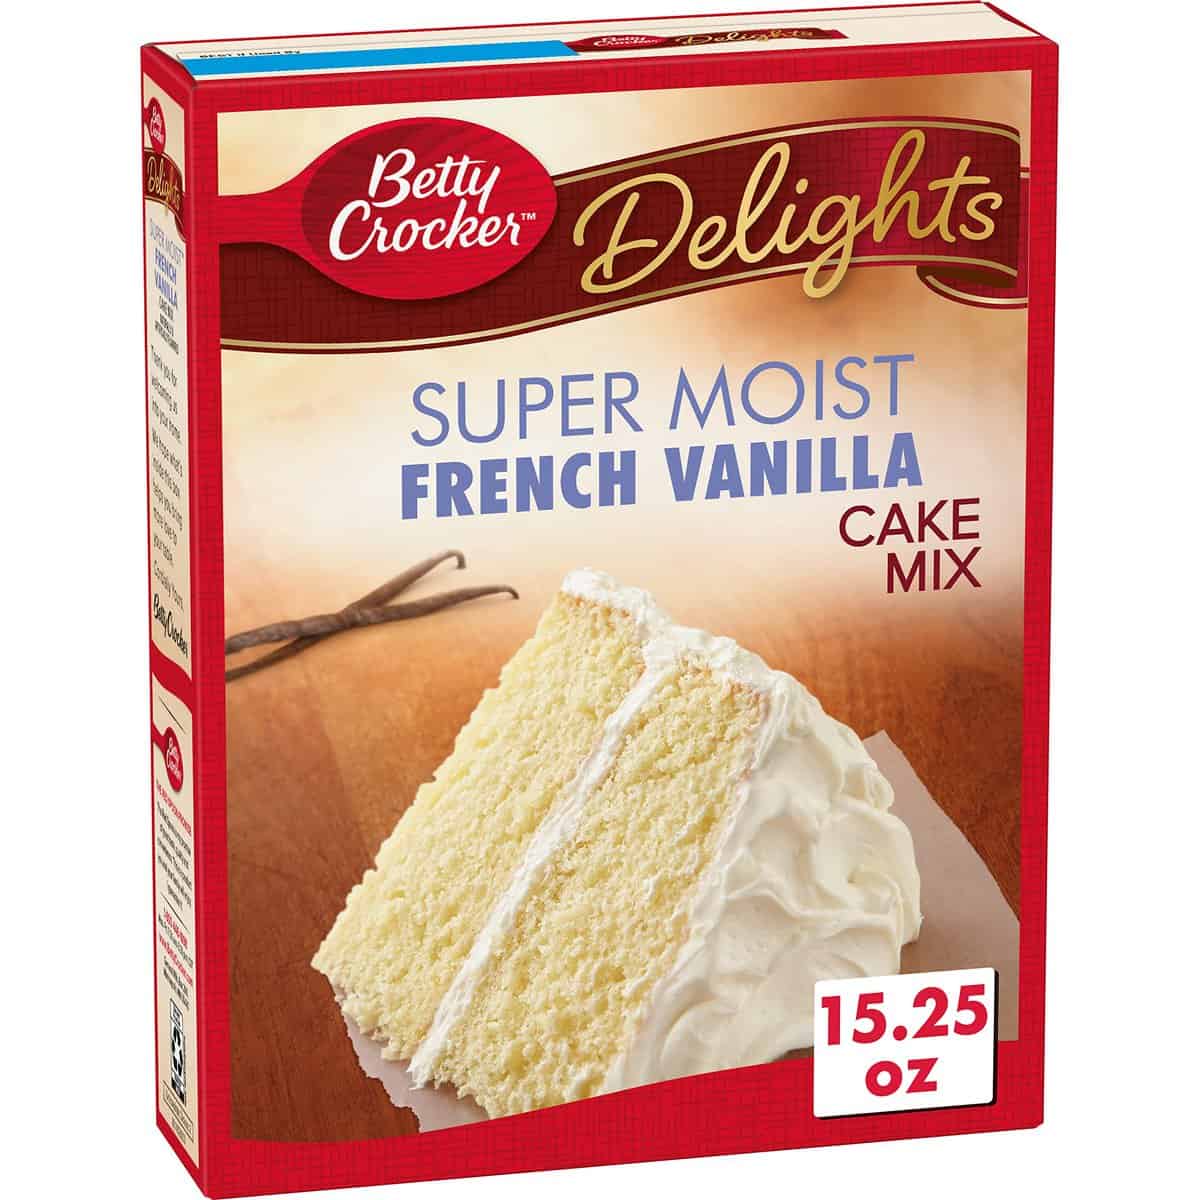 French vanilla vegan cake mix